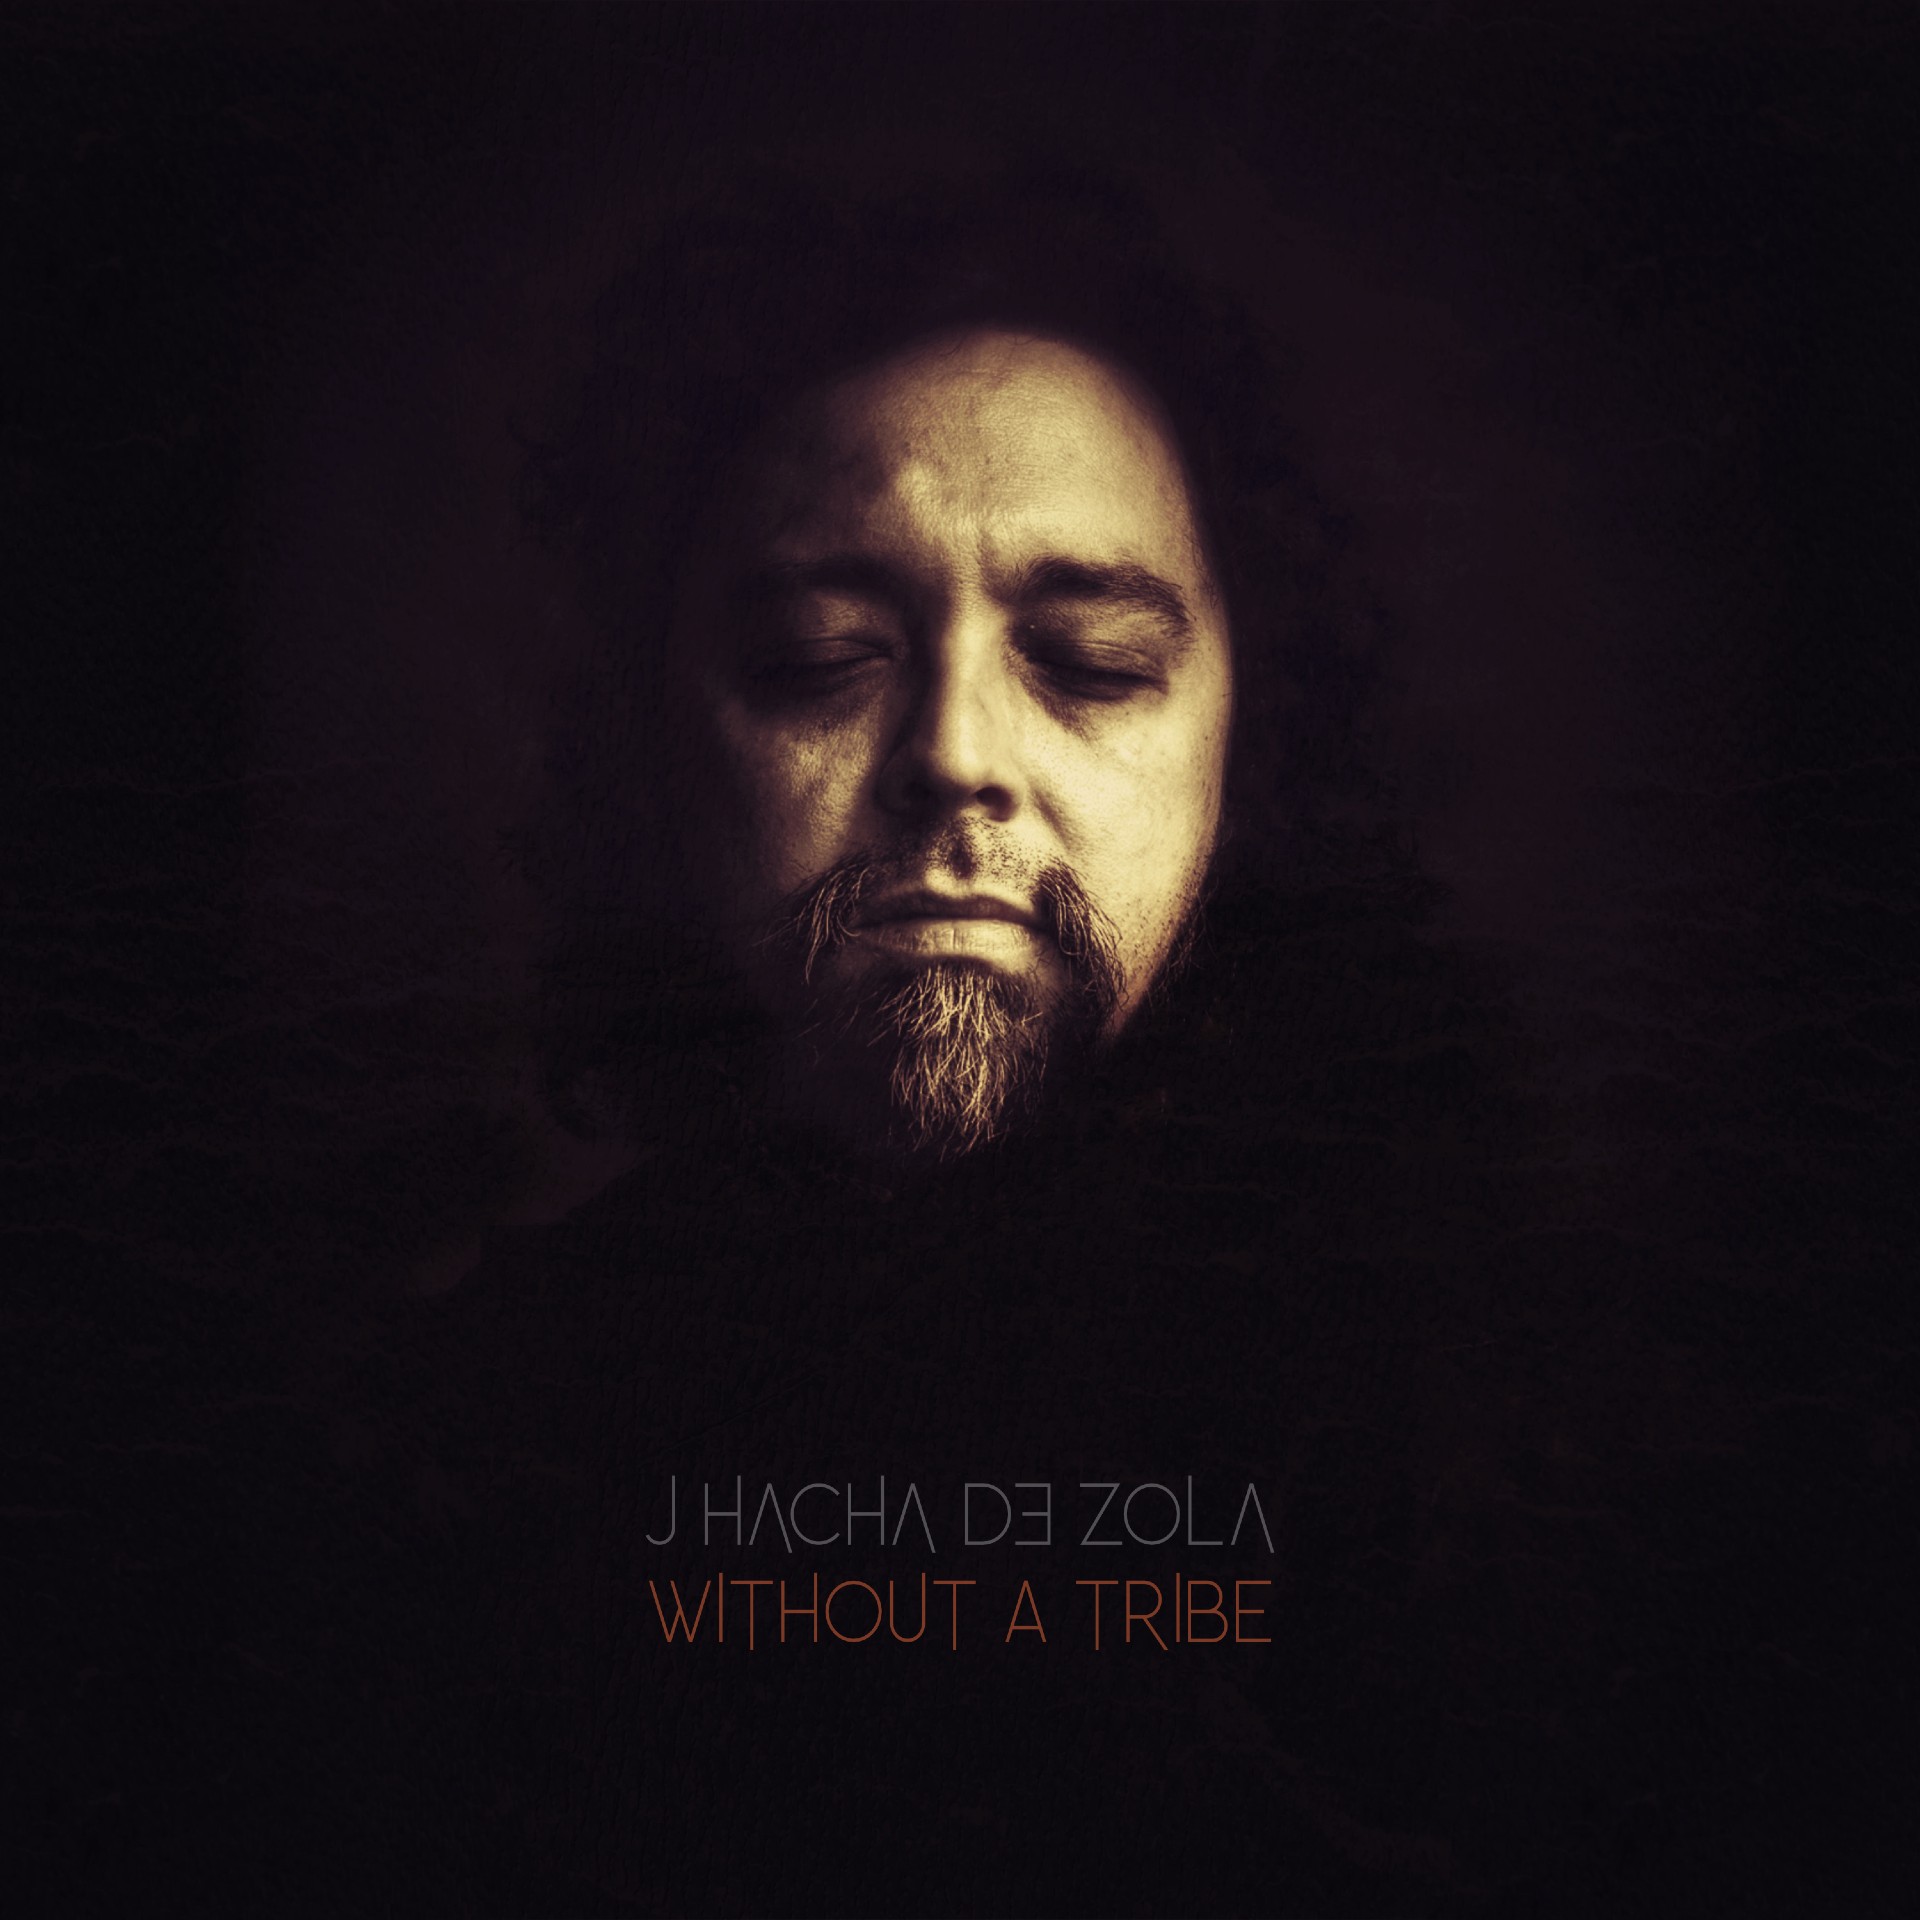 J Hacha De Zola ‘Without a Tribe’ album artwork